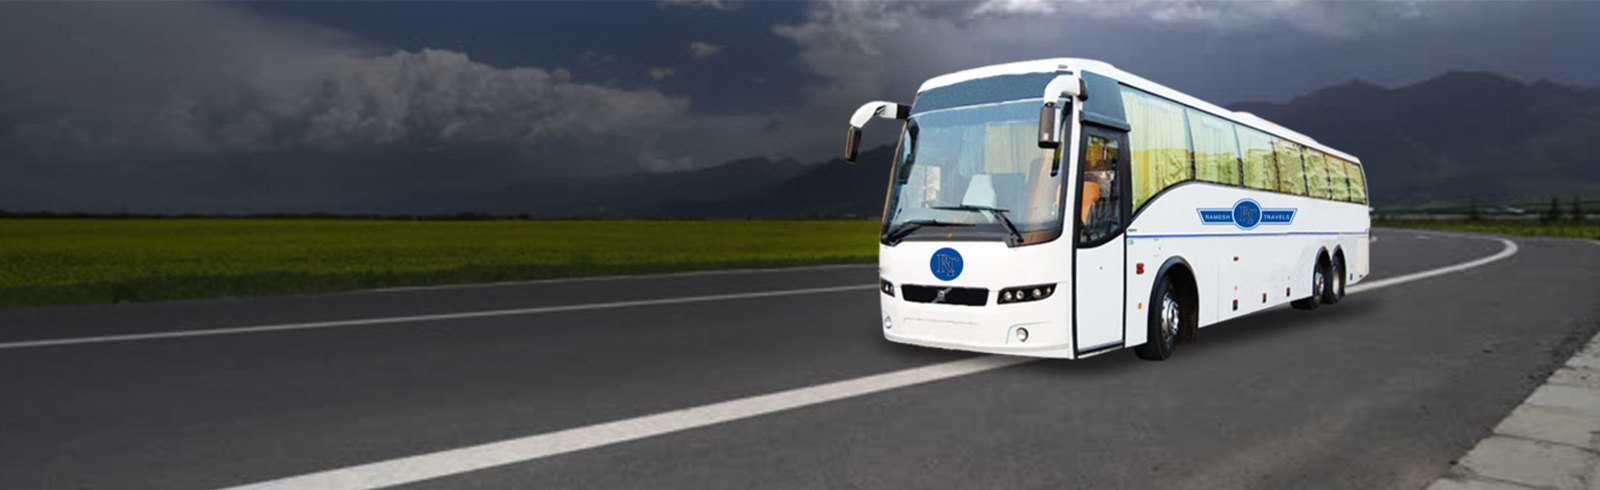 Bus Booking System,Rainet Technology(ClicknCash))